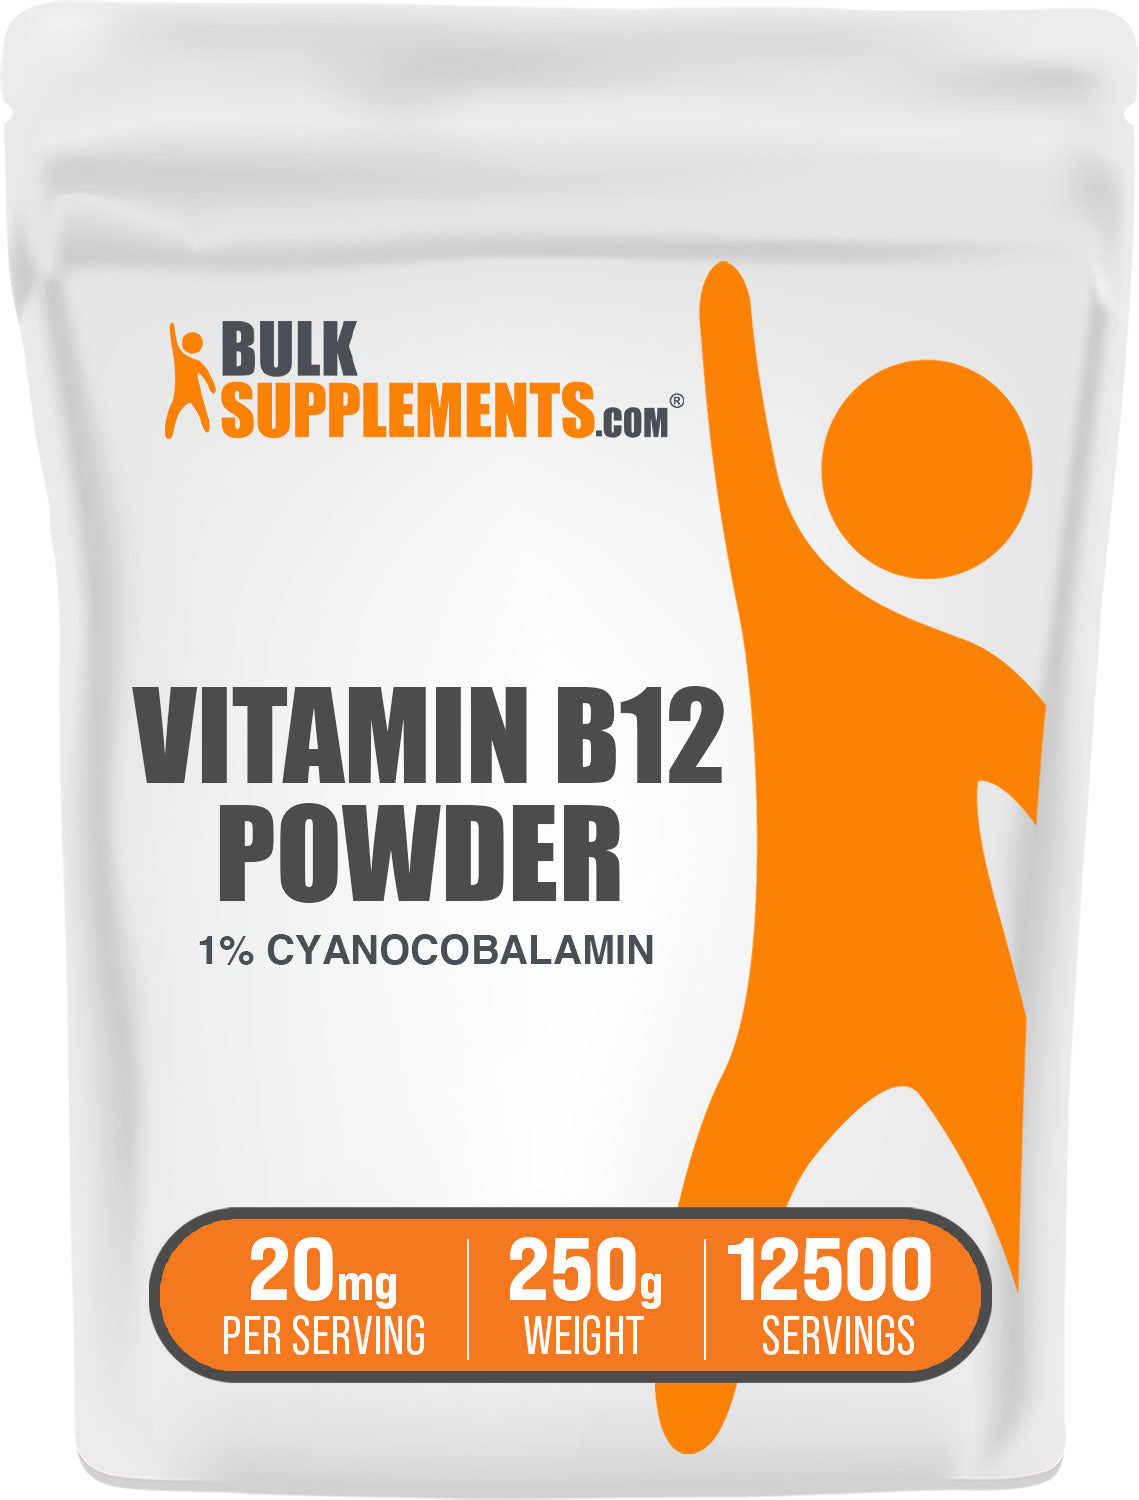 BulkSupplements Vitamin B12 Powder 1% Cyanocobalamin 250g bag